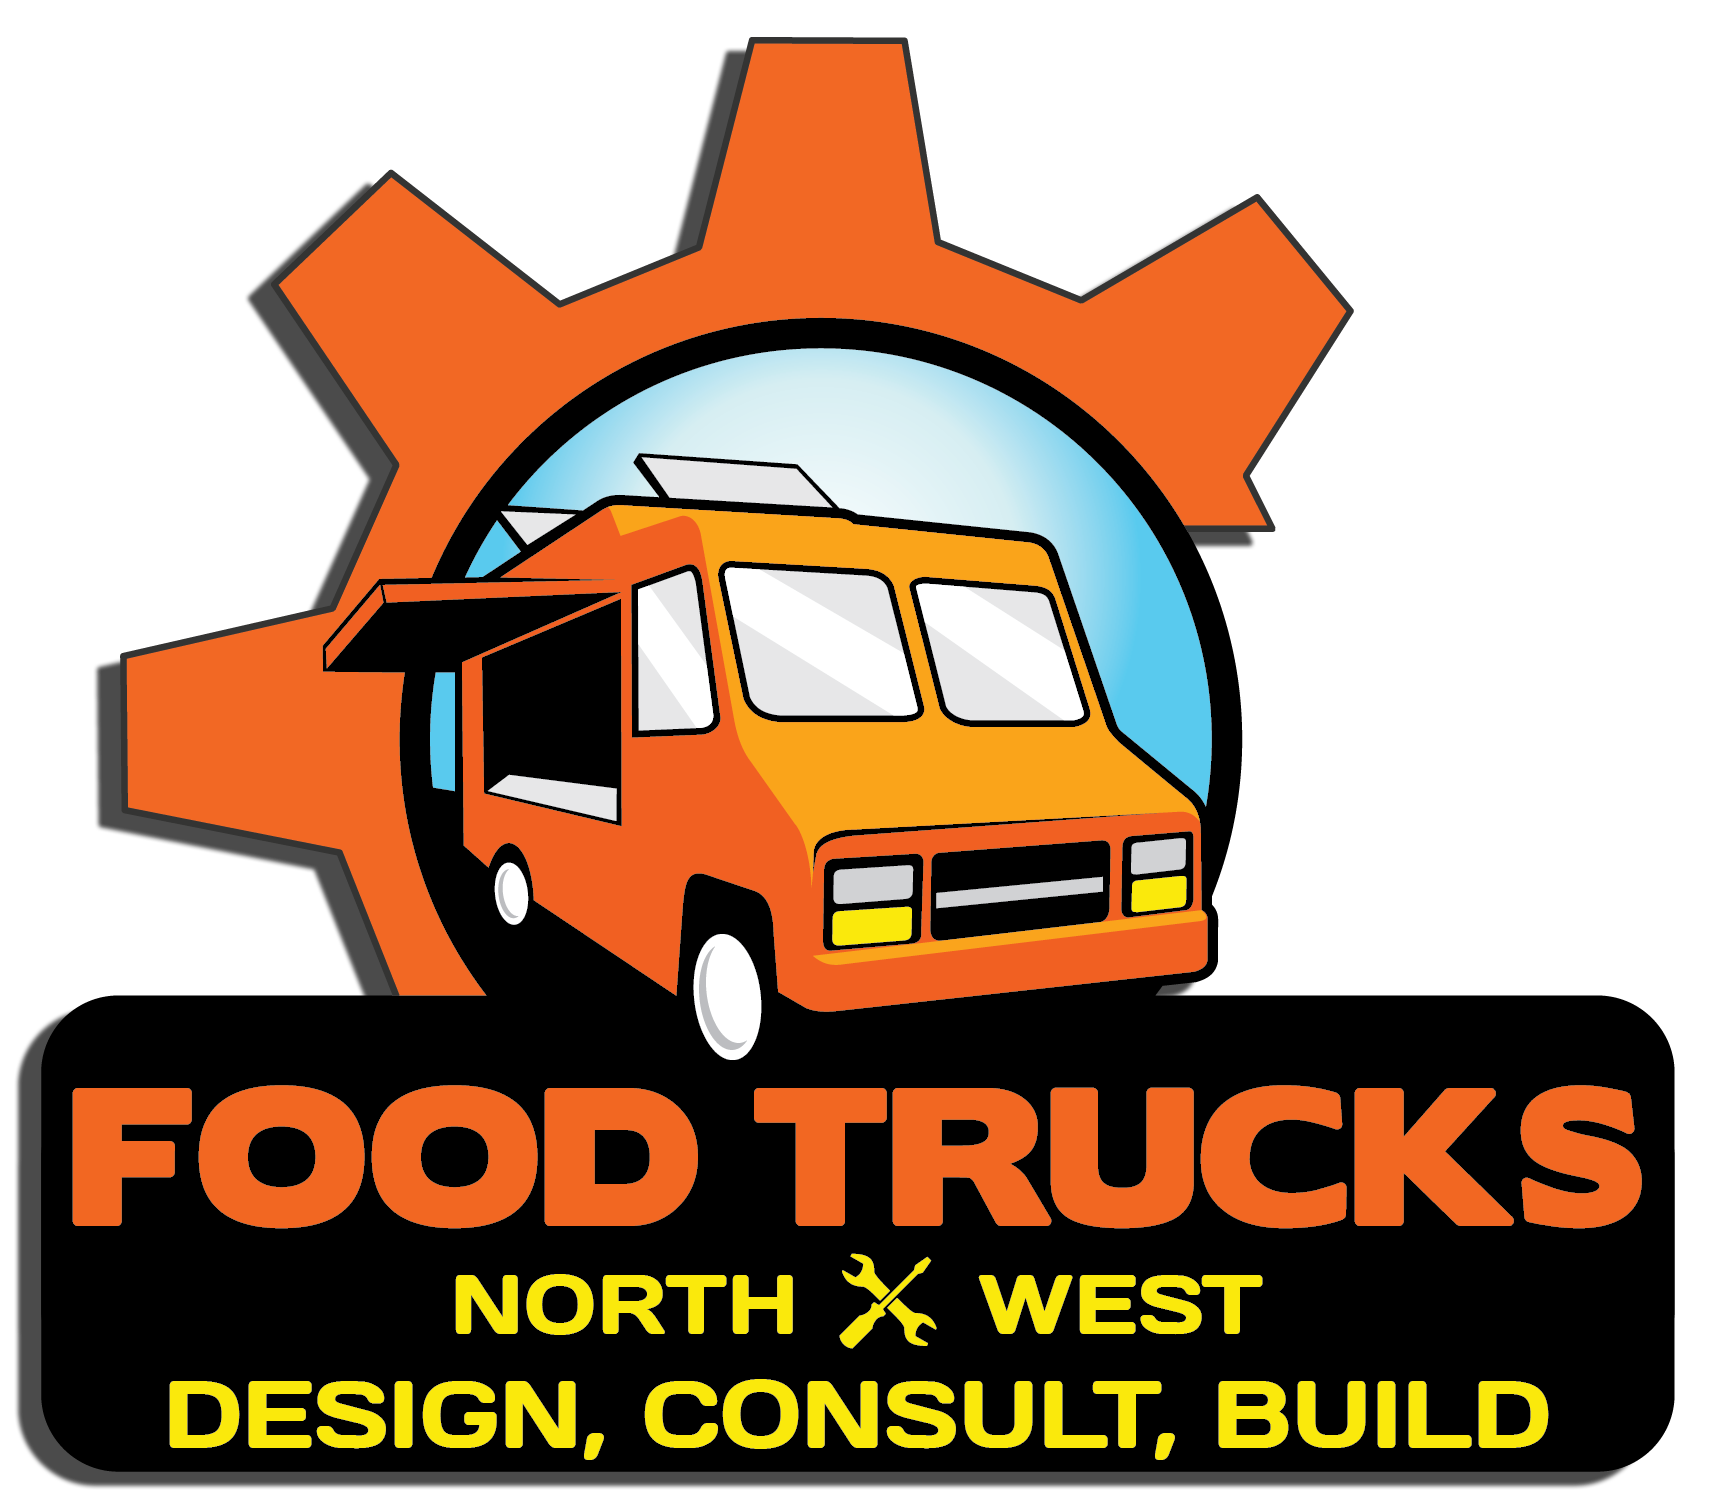  Photo image of the Food Trucks NW logo 